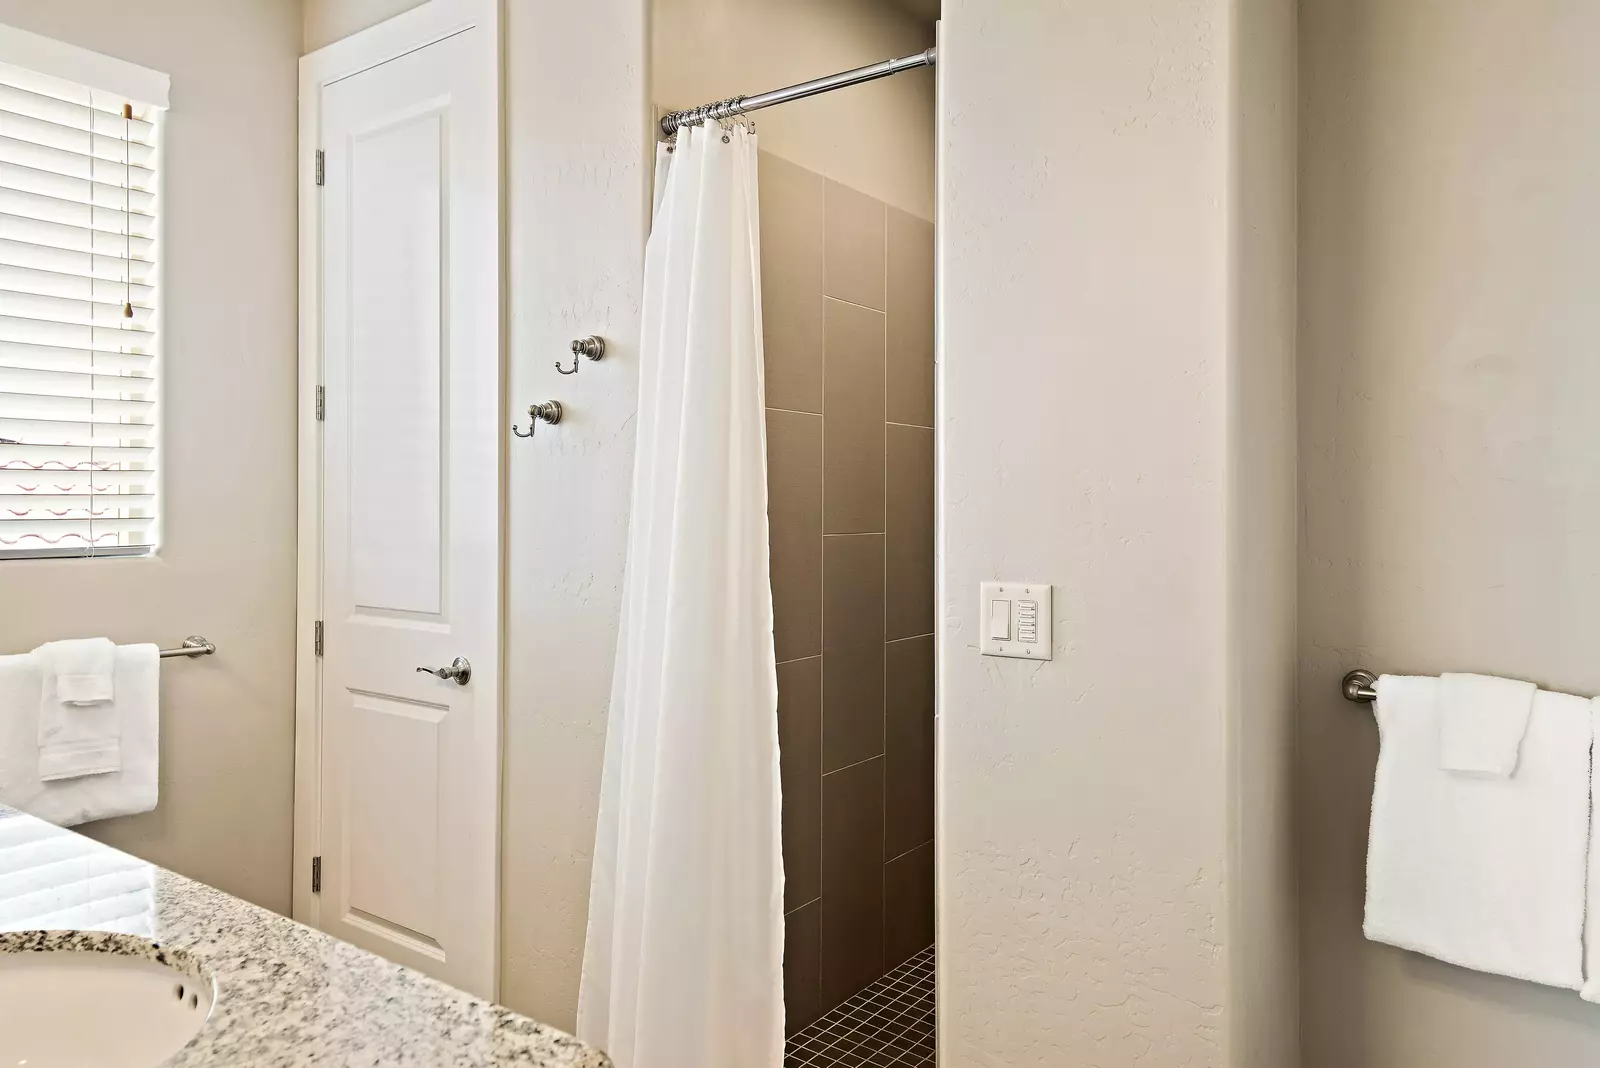 Master Bedroom 3 Bathroom With Shower